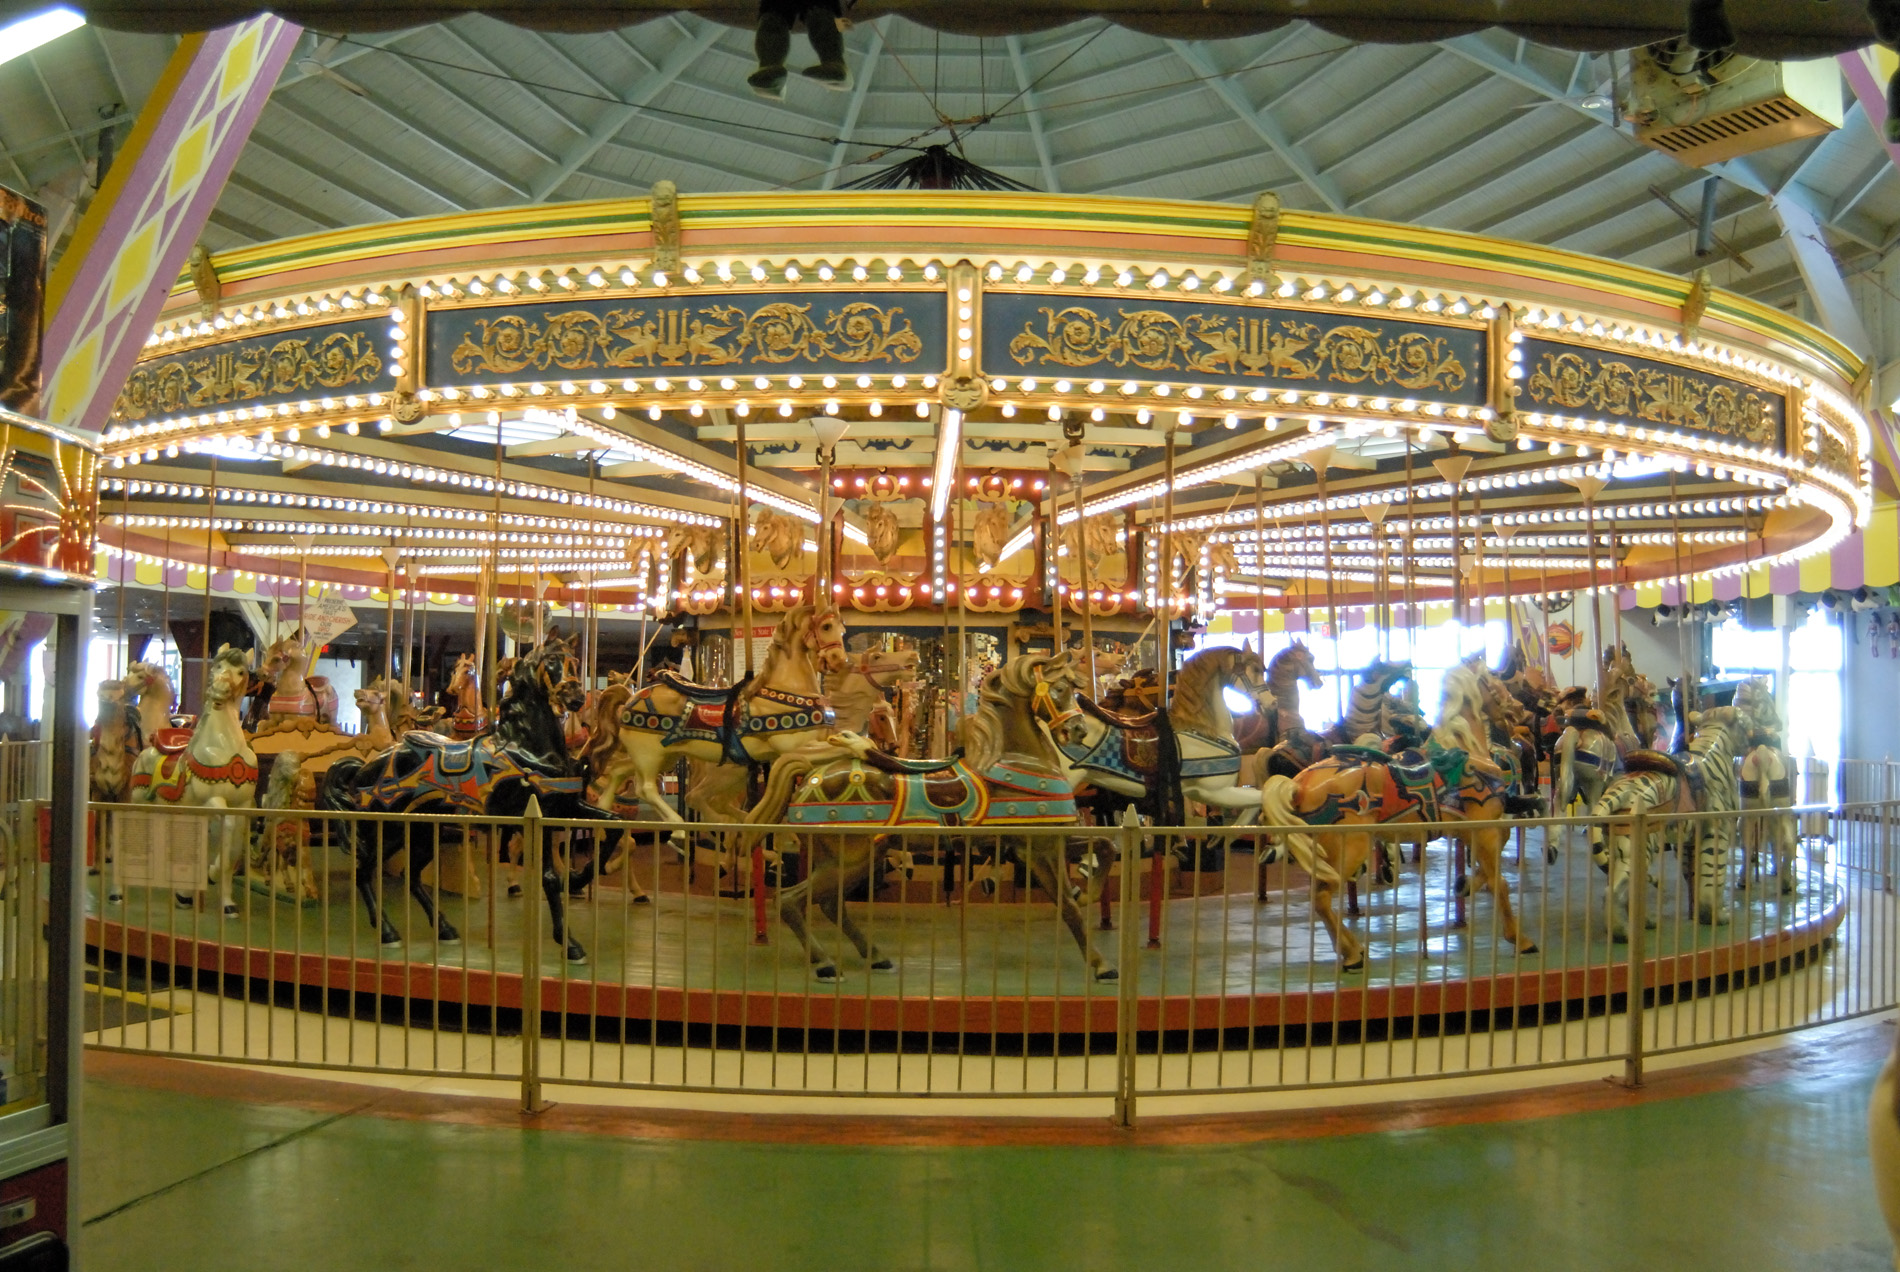 Pier Village - Renlita's NuFold Turns Carousel Into Year-Round